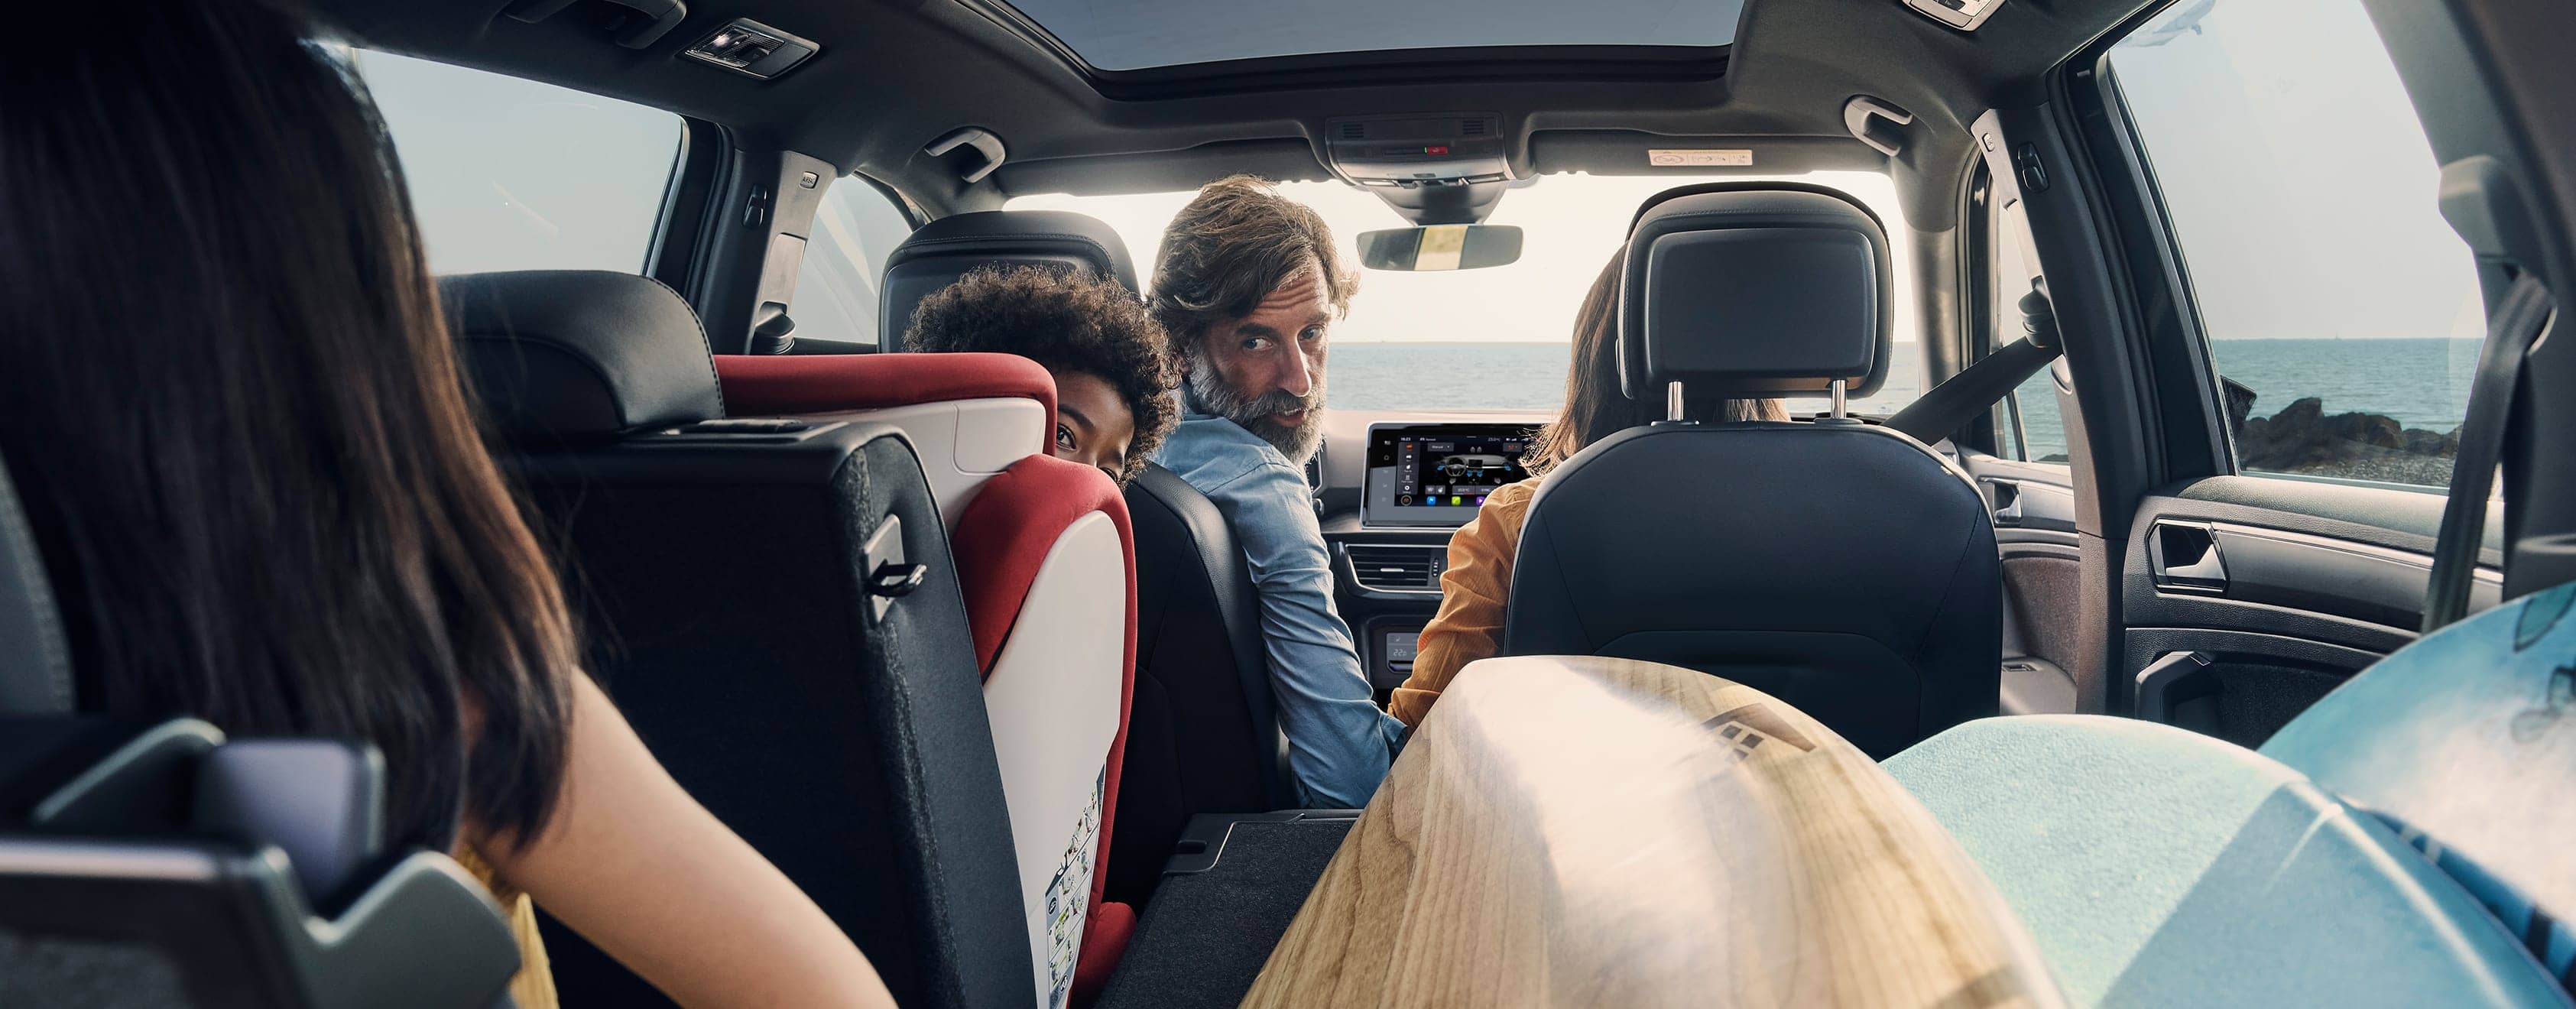 SEAT Tarraco SUV 7 seater interior design foldable folding sliding seats